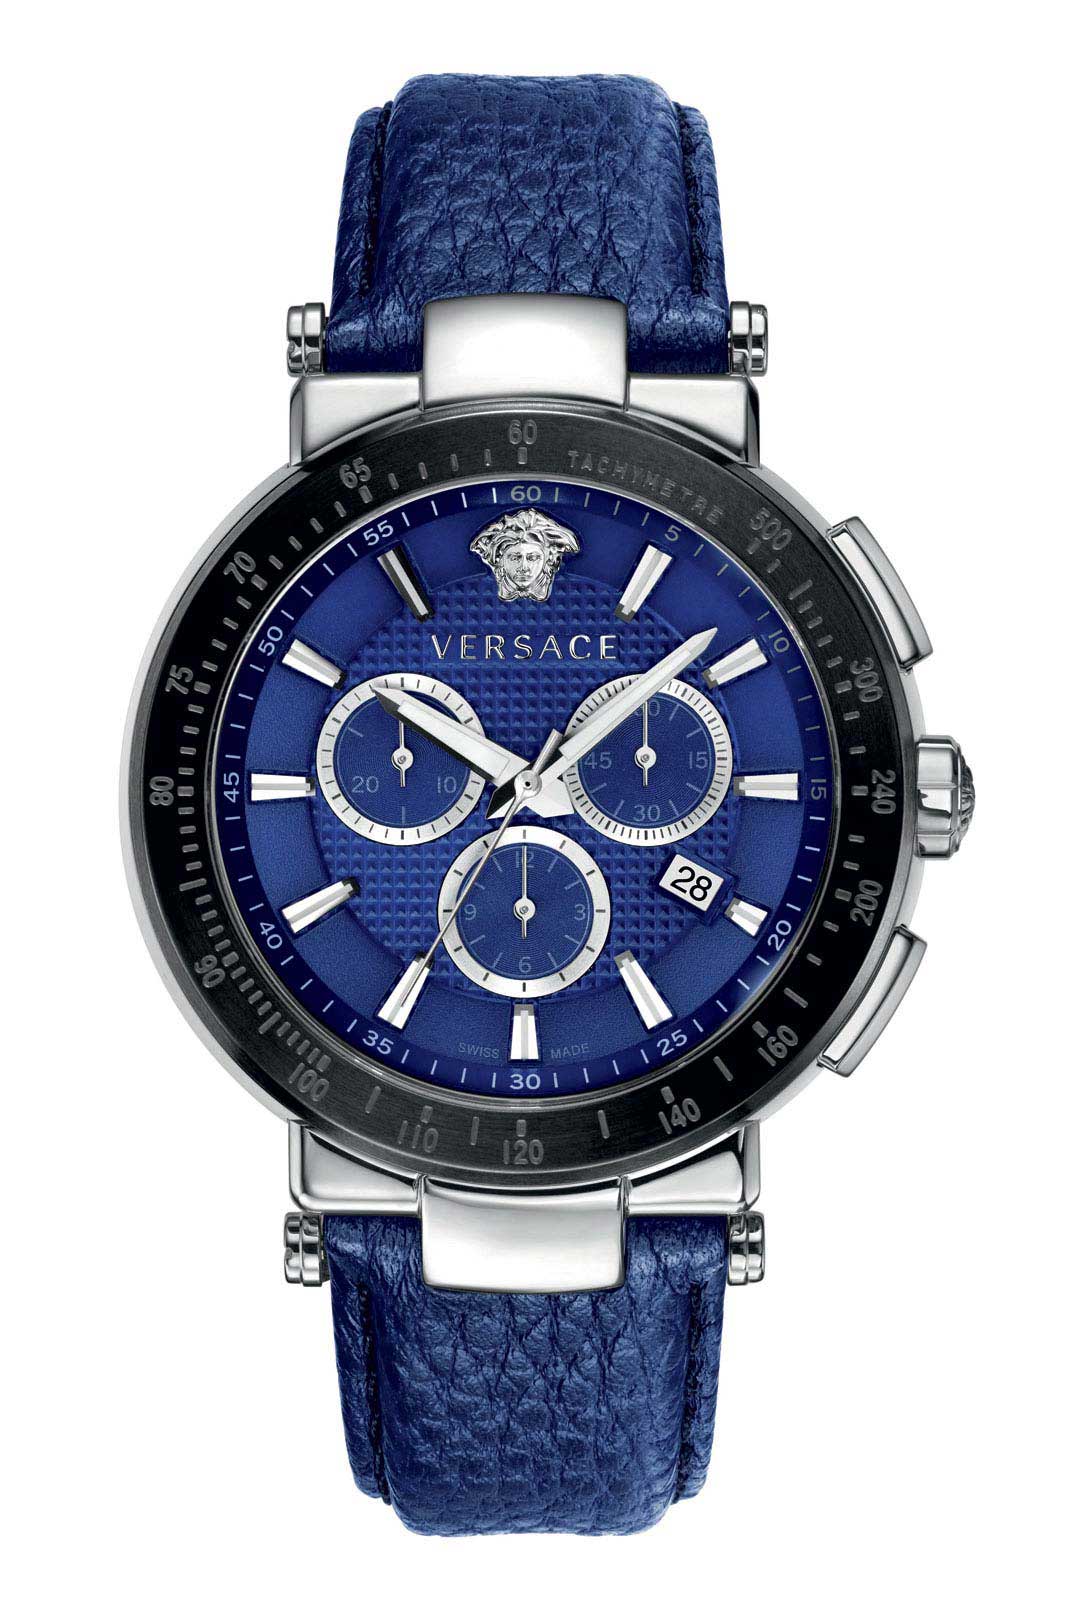 Versace QUARTZ CHRONO watch 5030D STEEL BLUE